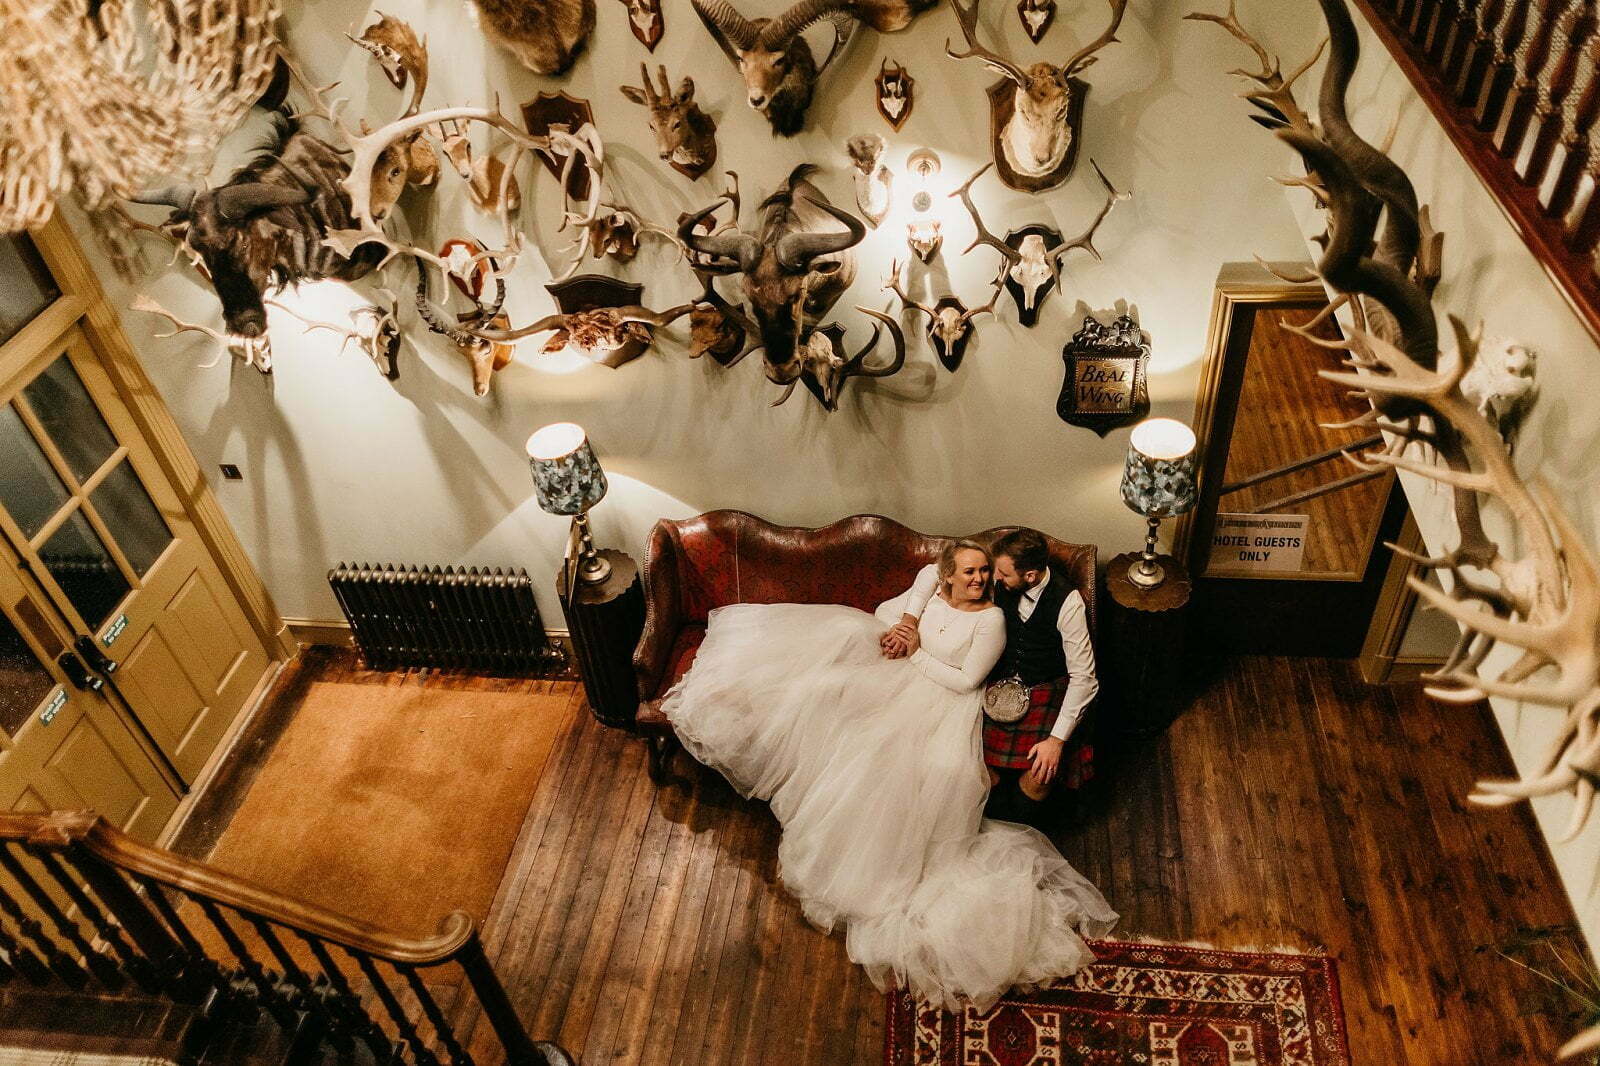 fife arms hotel braemar luxury micro wedding venue bride groom portraits on couch under antlers smiling